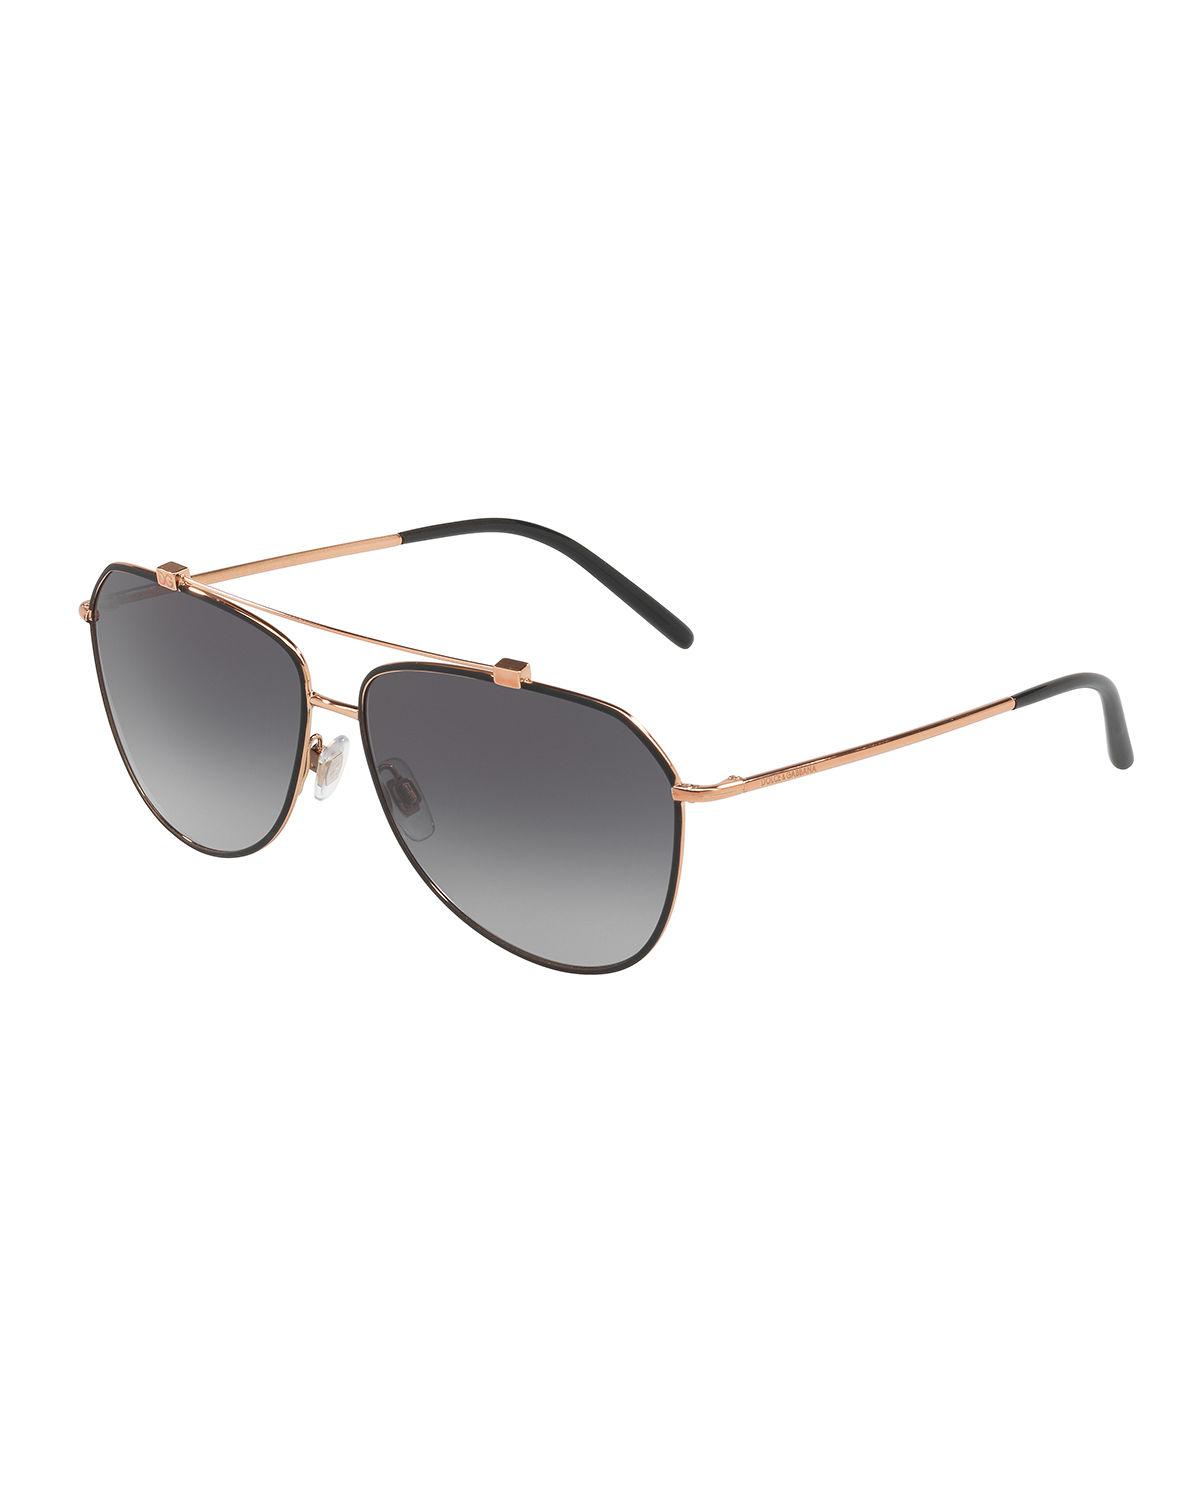 Dolce & Gabbana Gradient Aviator Sunglasses in Black - Lyst